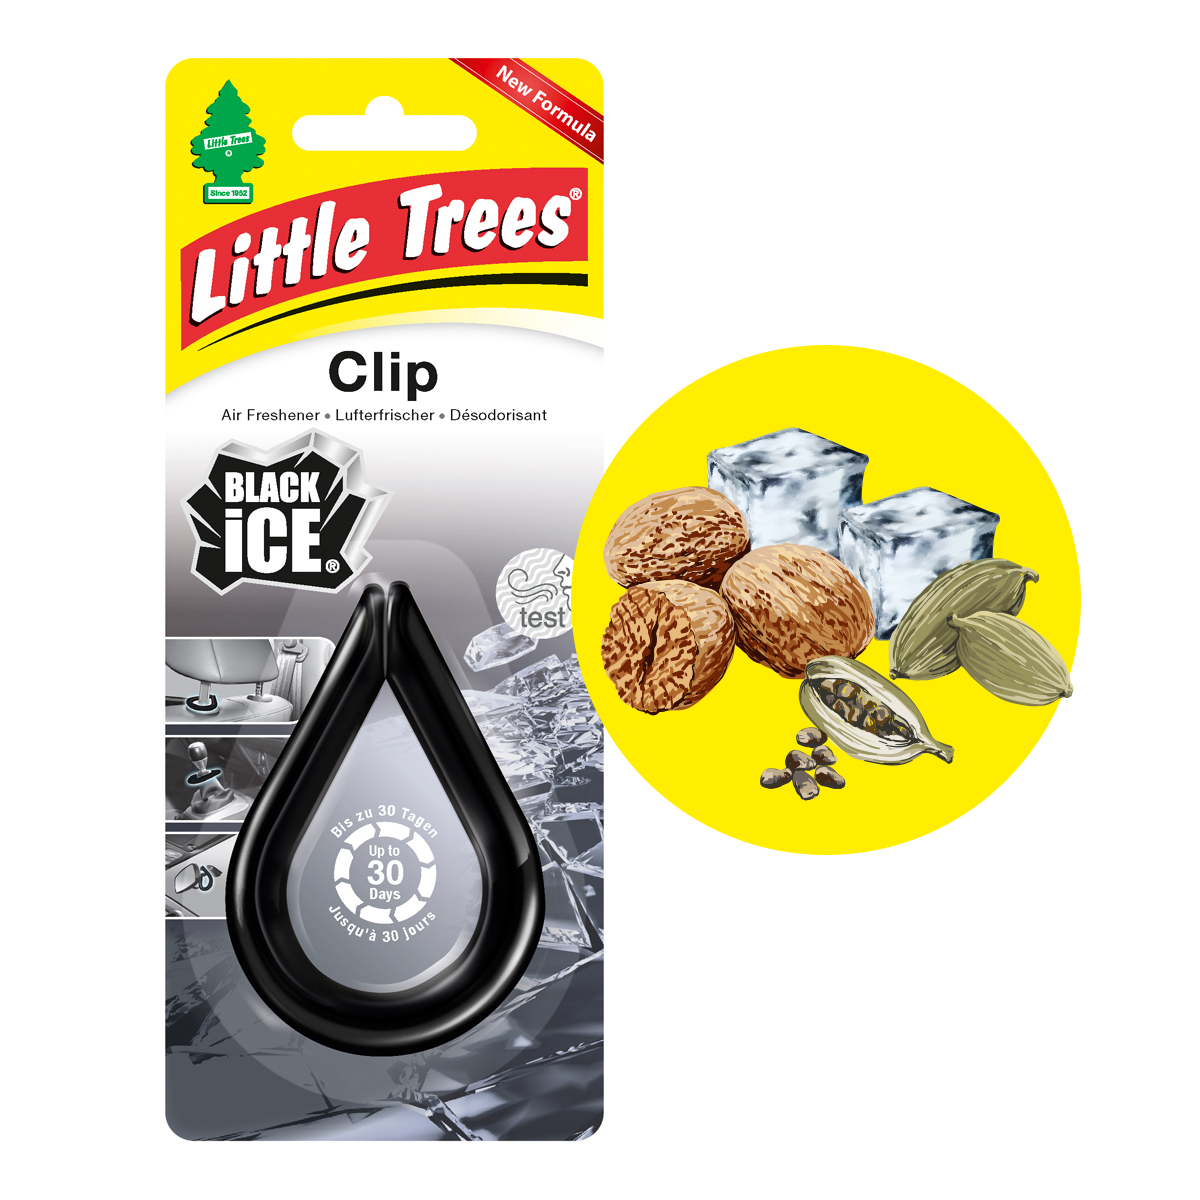 Ароматизатор воздуха Little Trees Clip Чёрный лёд (9748.7) - фото 2